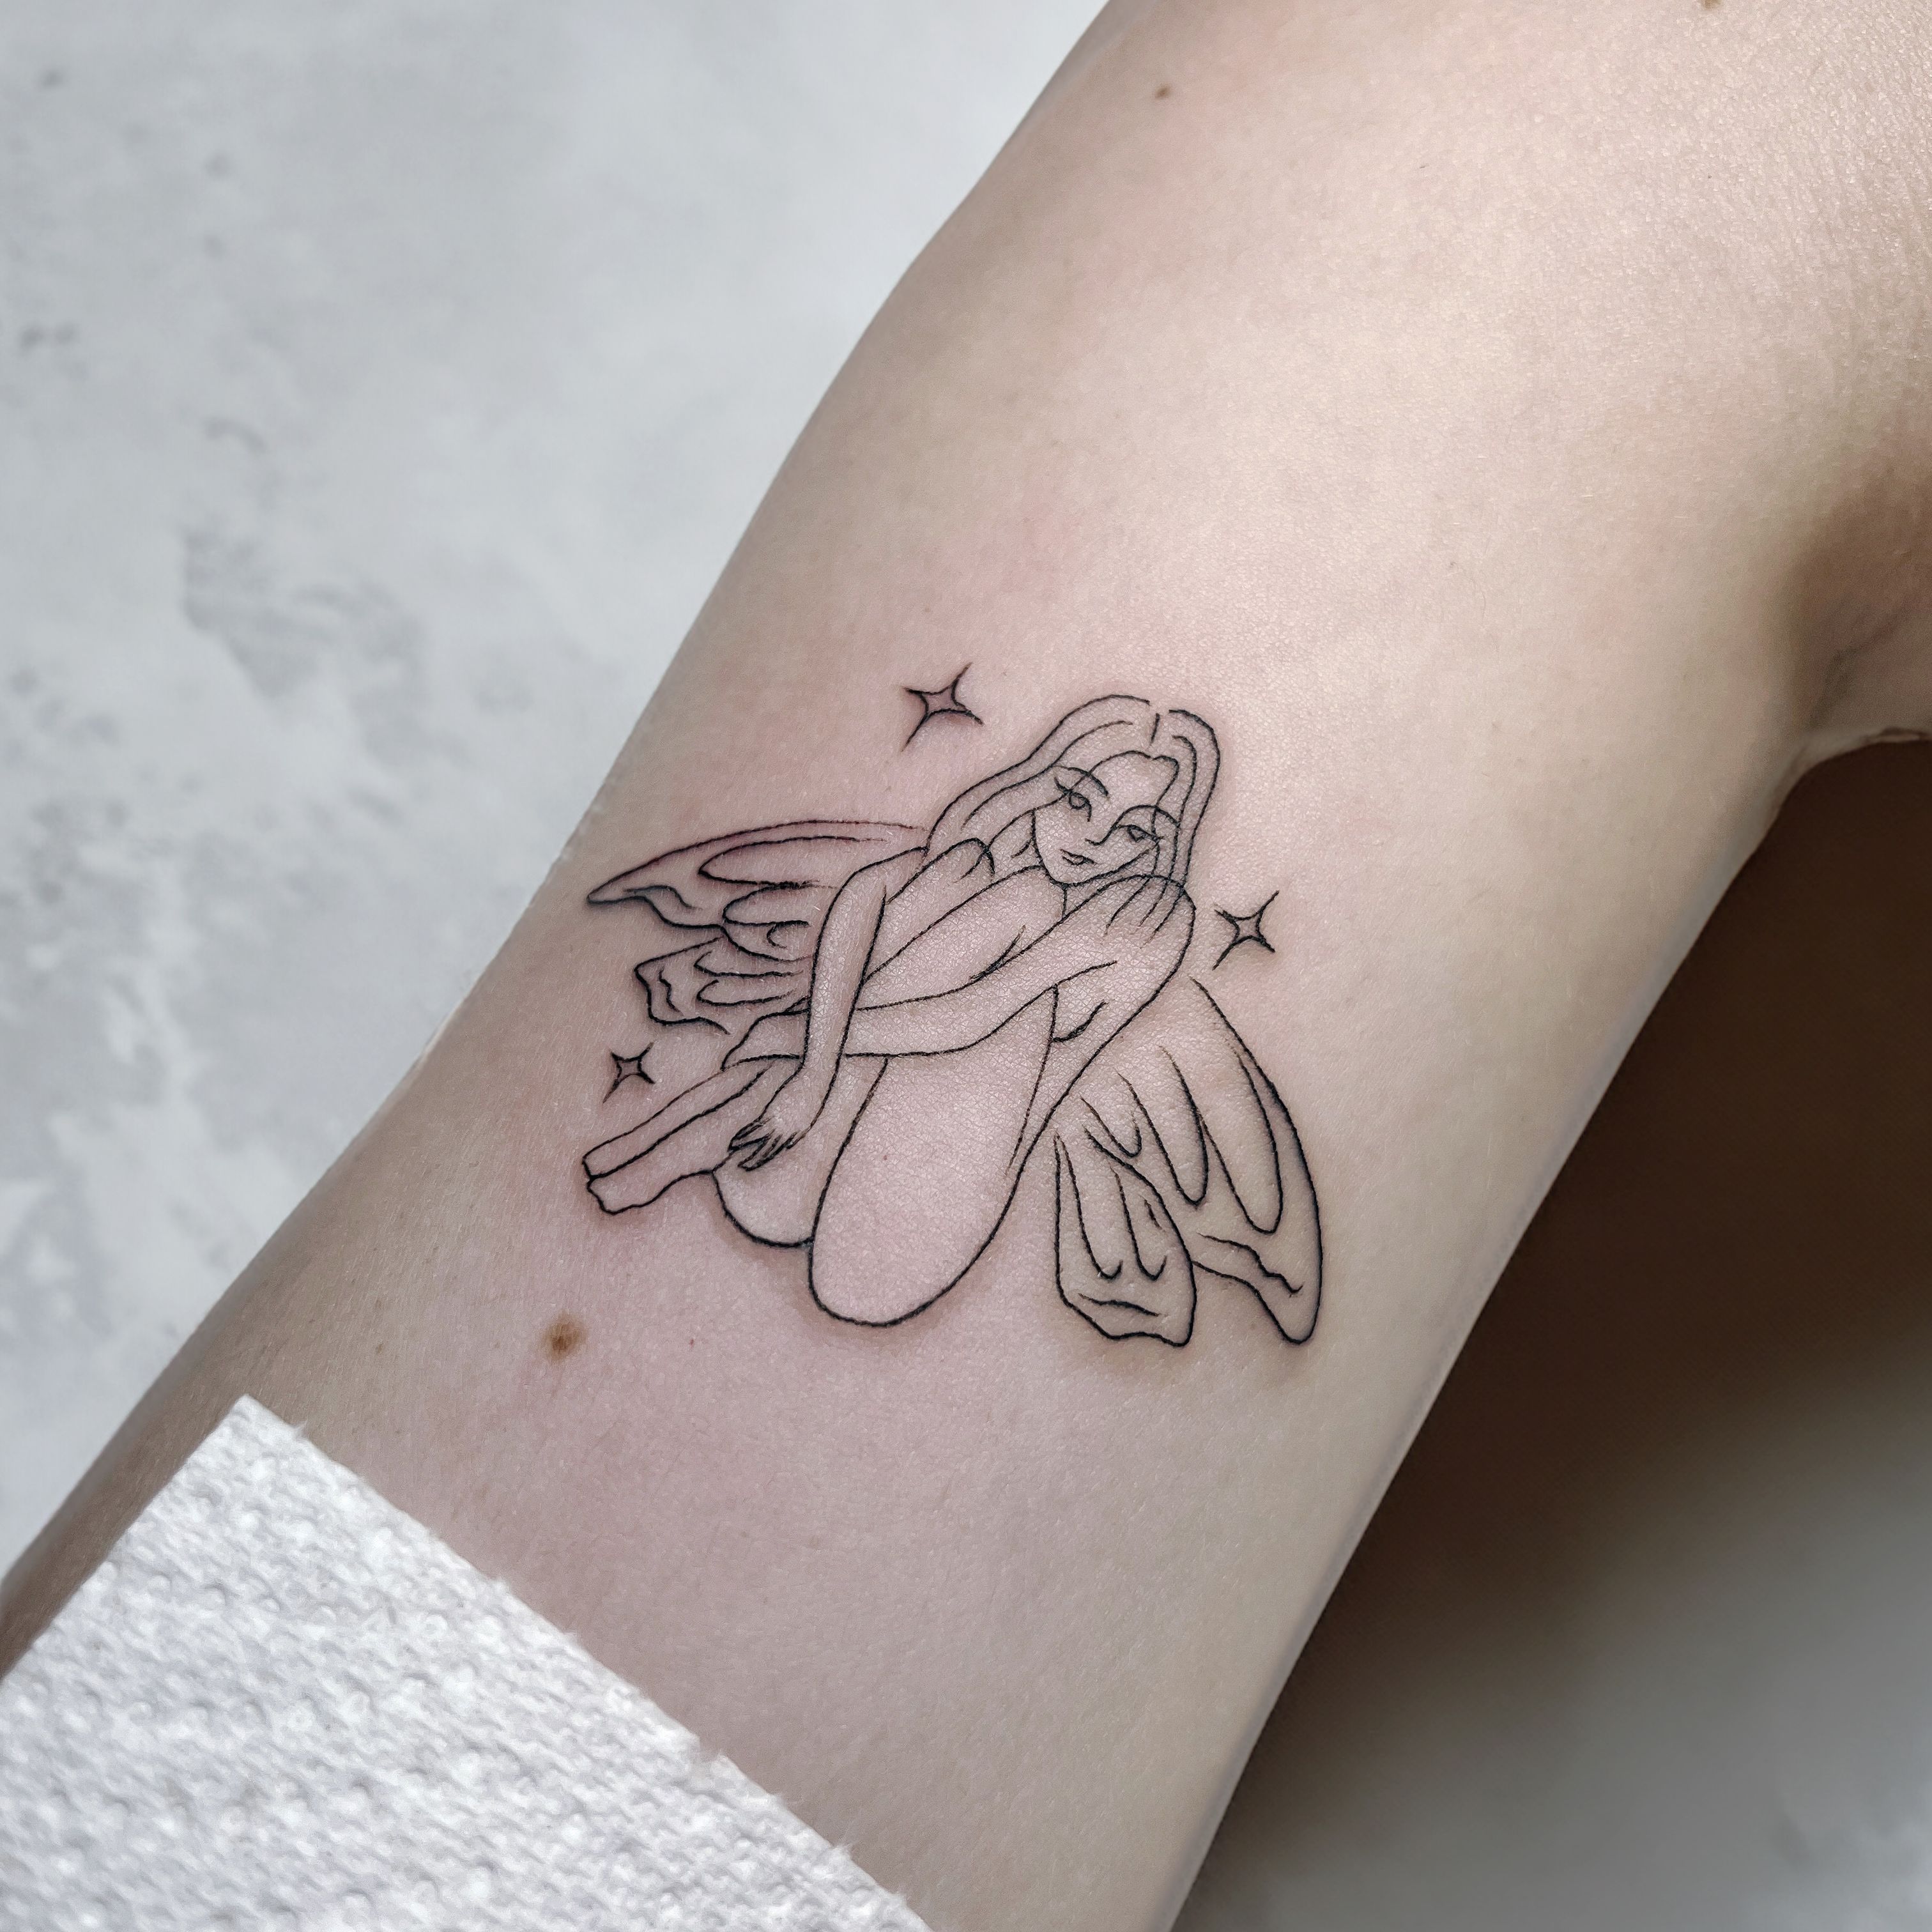 Bad Magical Tattoos — Spirit Portrait Ladyhawke fanfic tattoos, anyone?